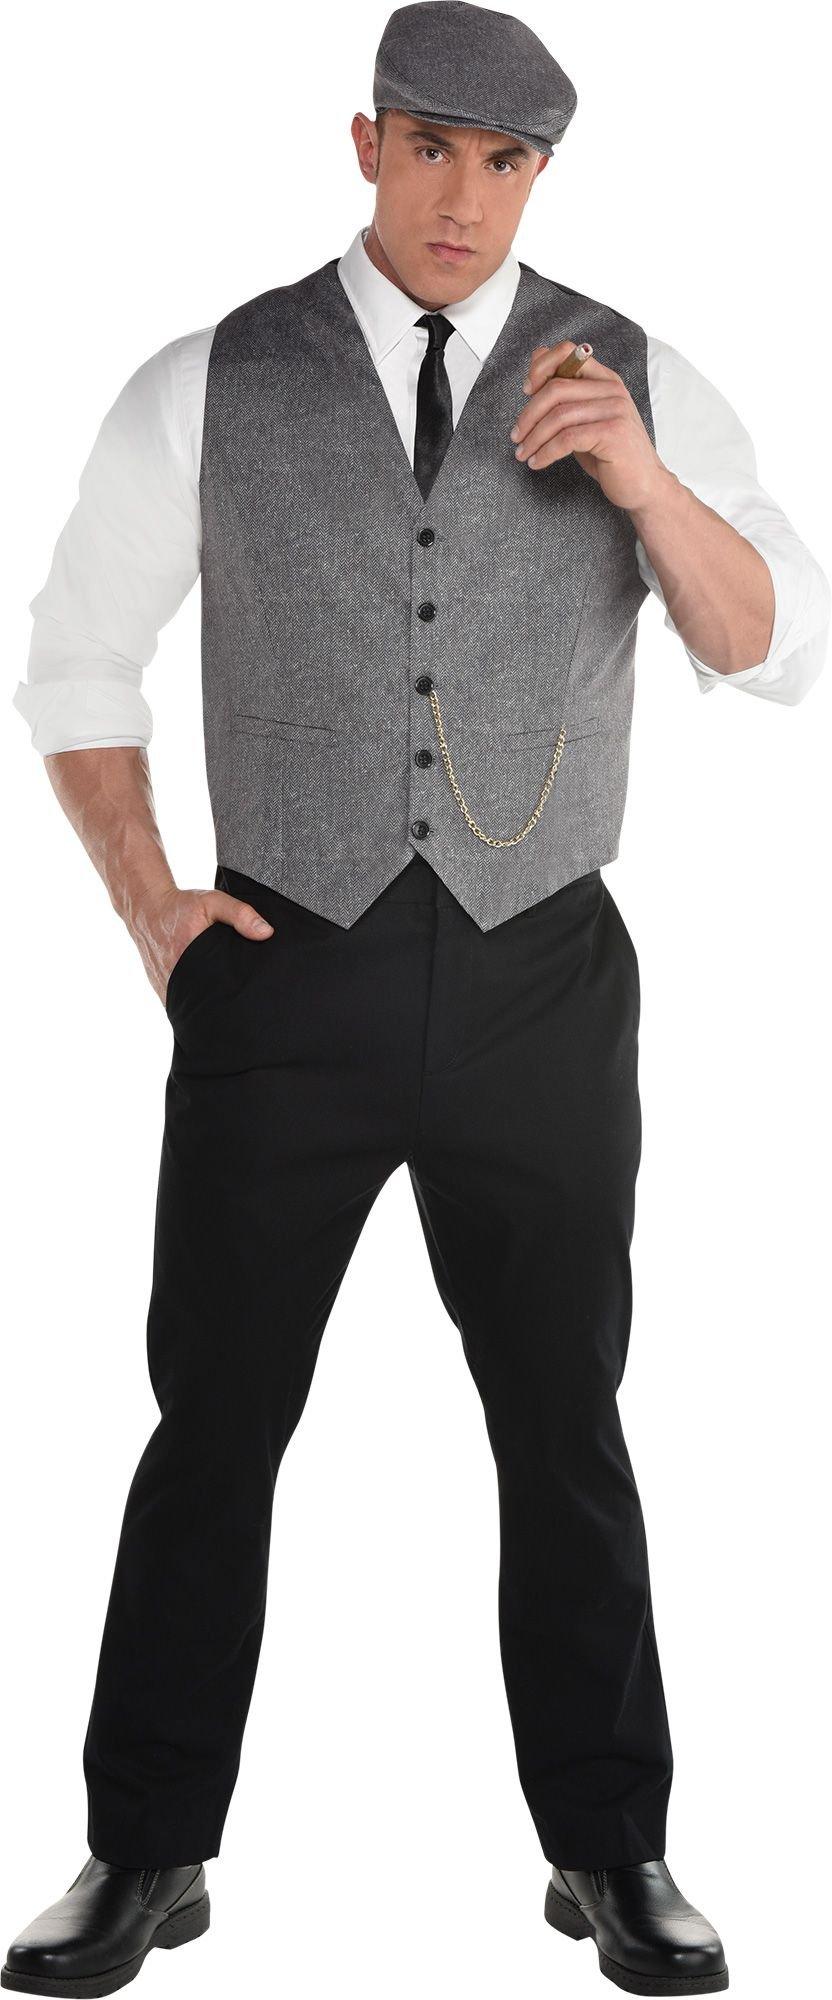 Adult Roaring 20s Dapper Man Costume Plus Size